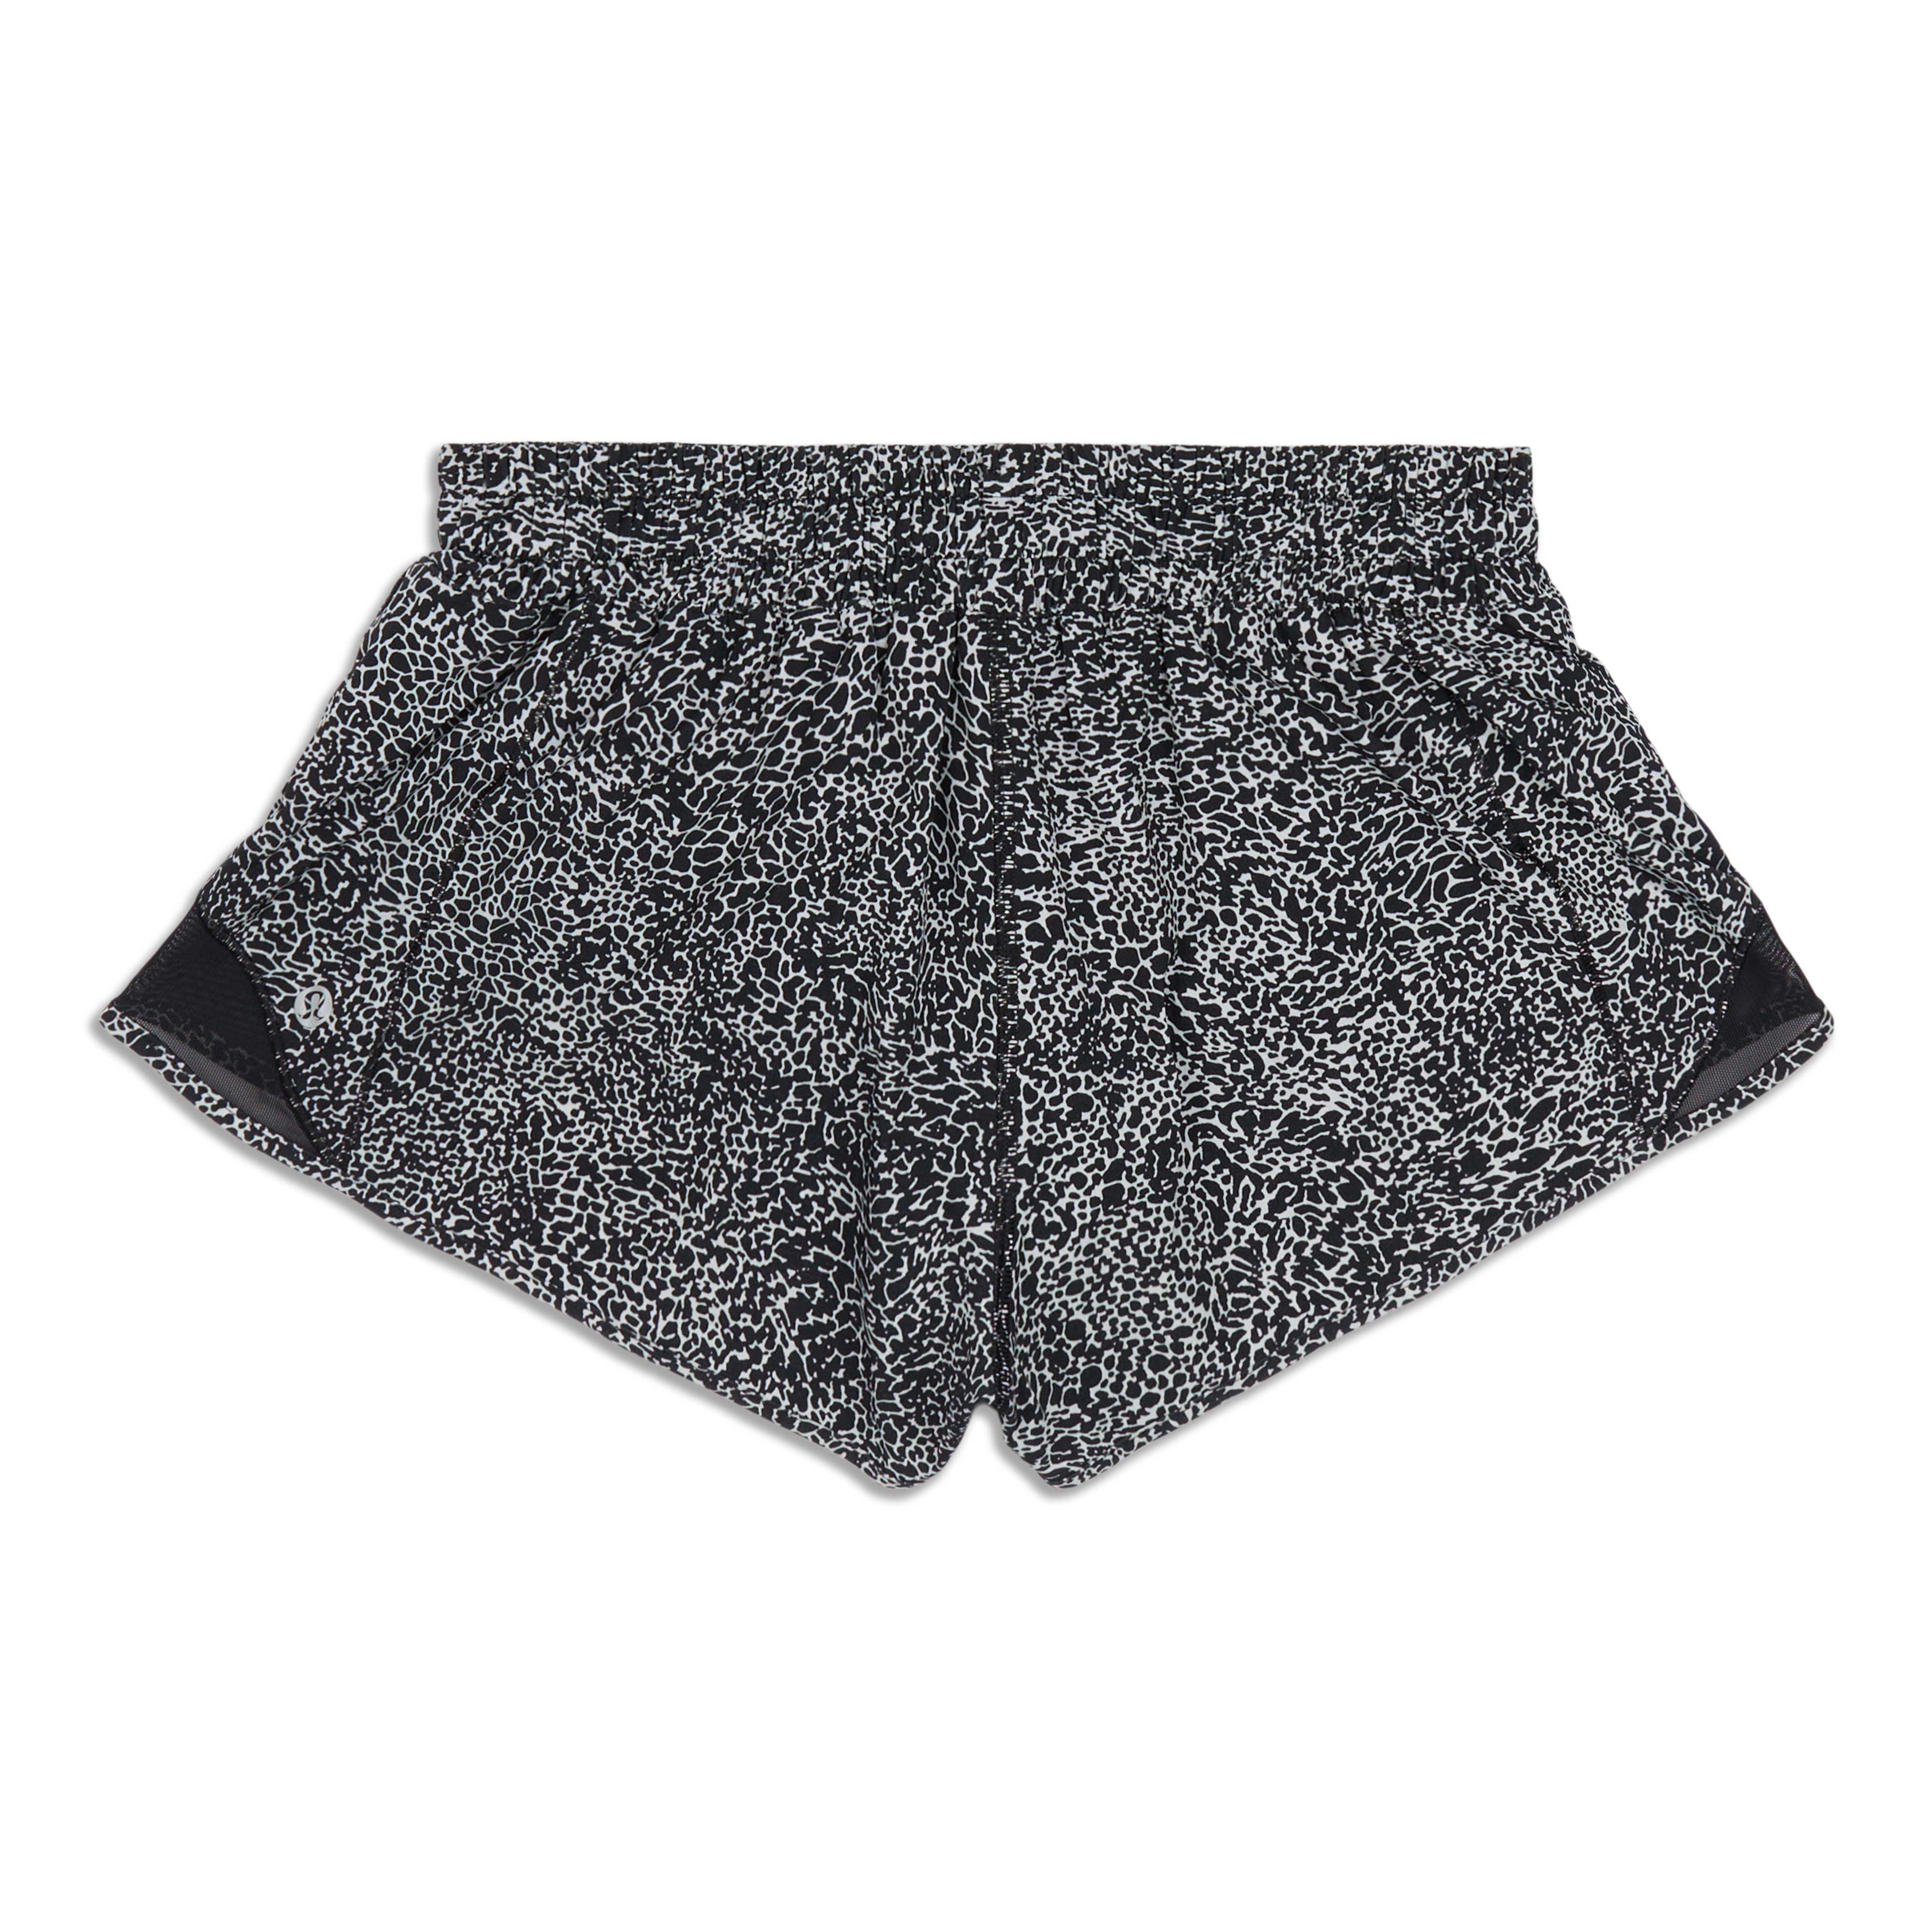 Lululemon Hotty Hot Shorts Low Rise Camo Deep Coal Black 2.5 Inseam SZ 10  Lined